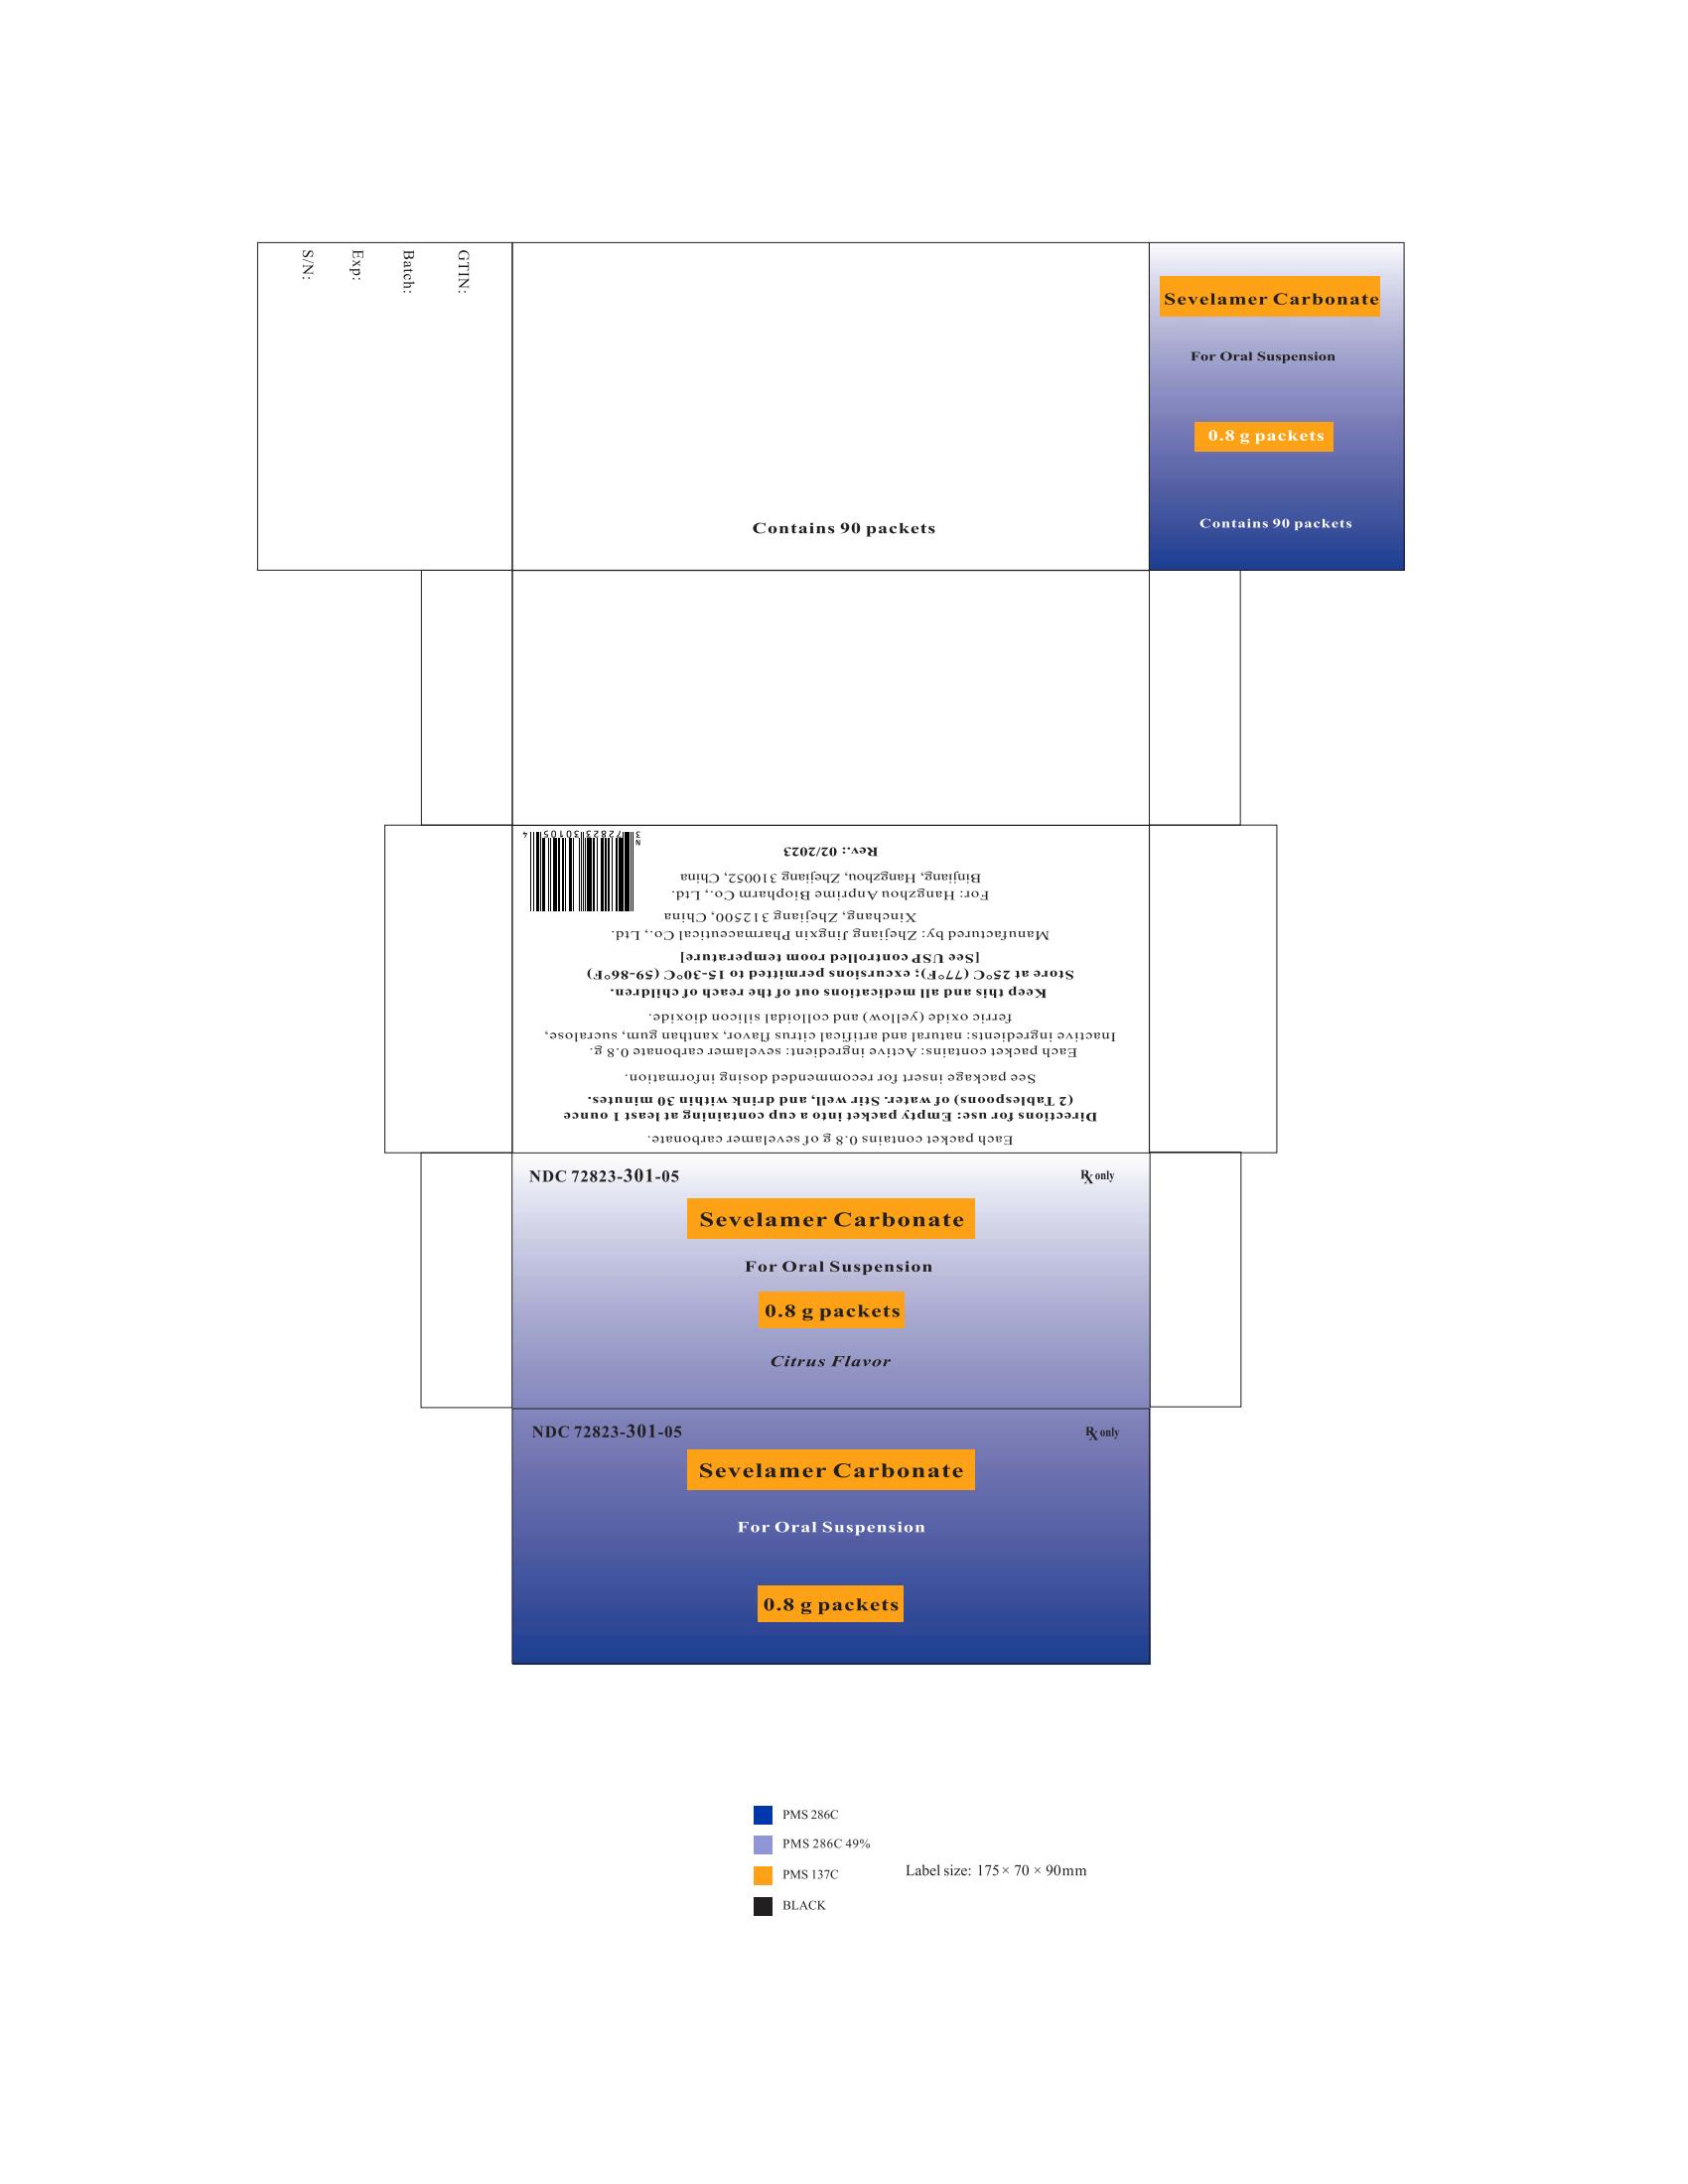 Package Label - Principal Display Panel - 0.8 g Packets, 90 per Carton